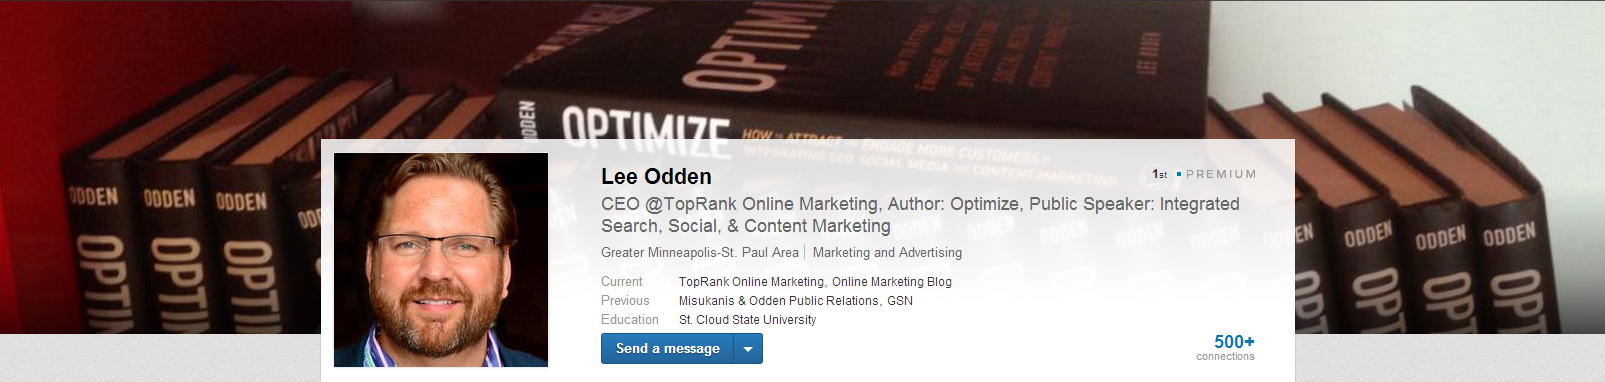 Lee Odden Optimized LinkedIn Profile